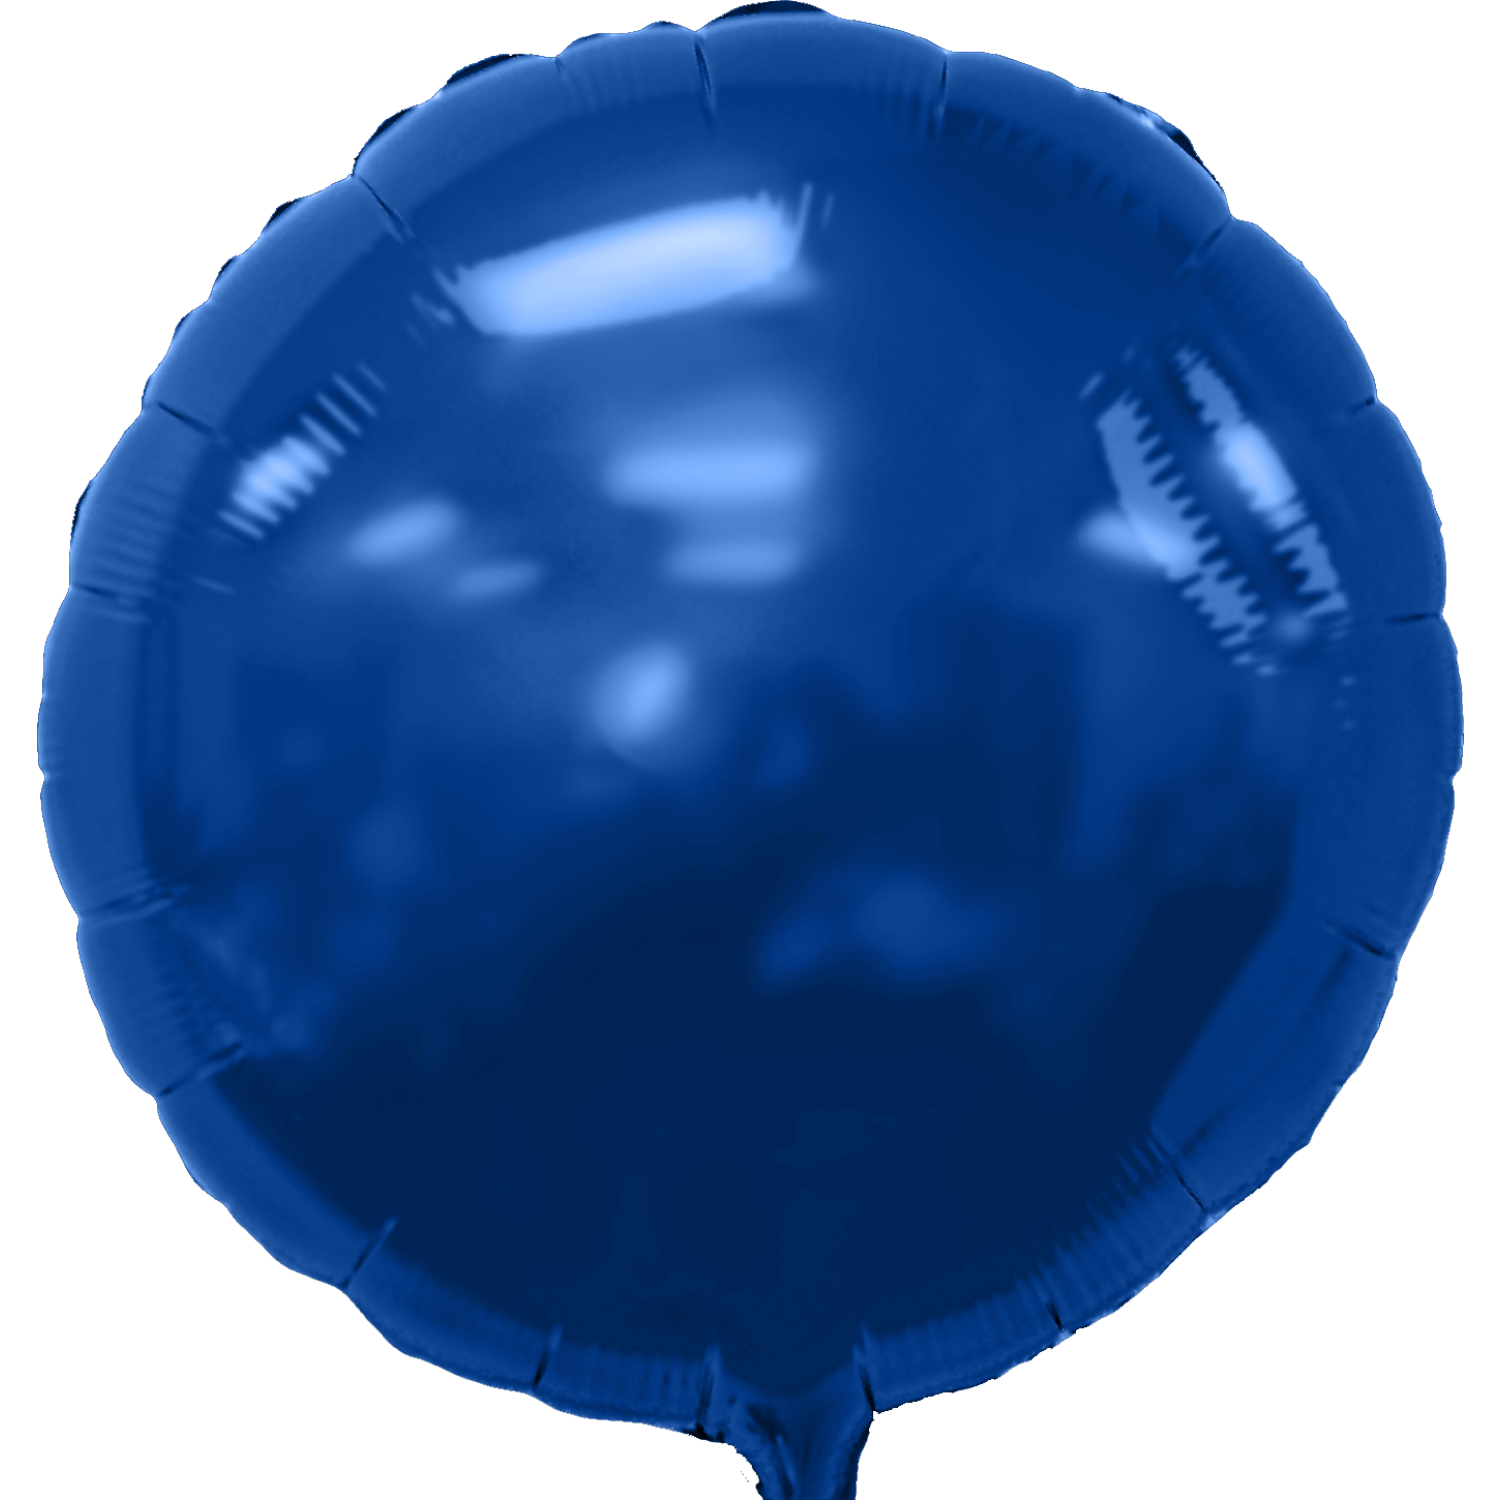 http://images.officebrain.com/migration-api-hidden-new/web/images/626/myrn-round-navy-blue.png